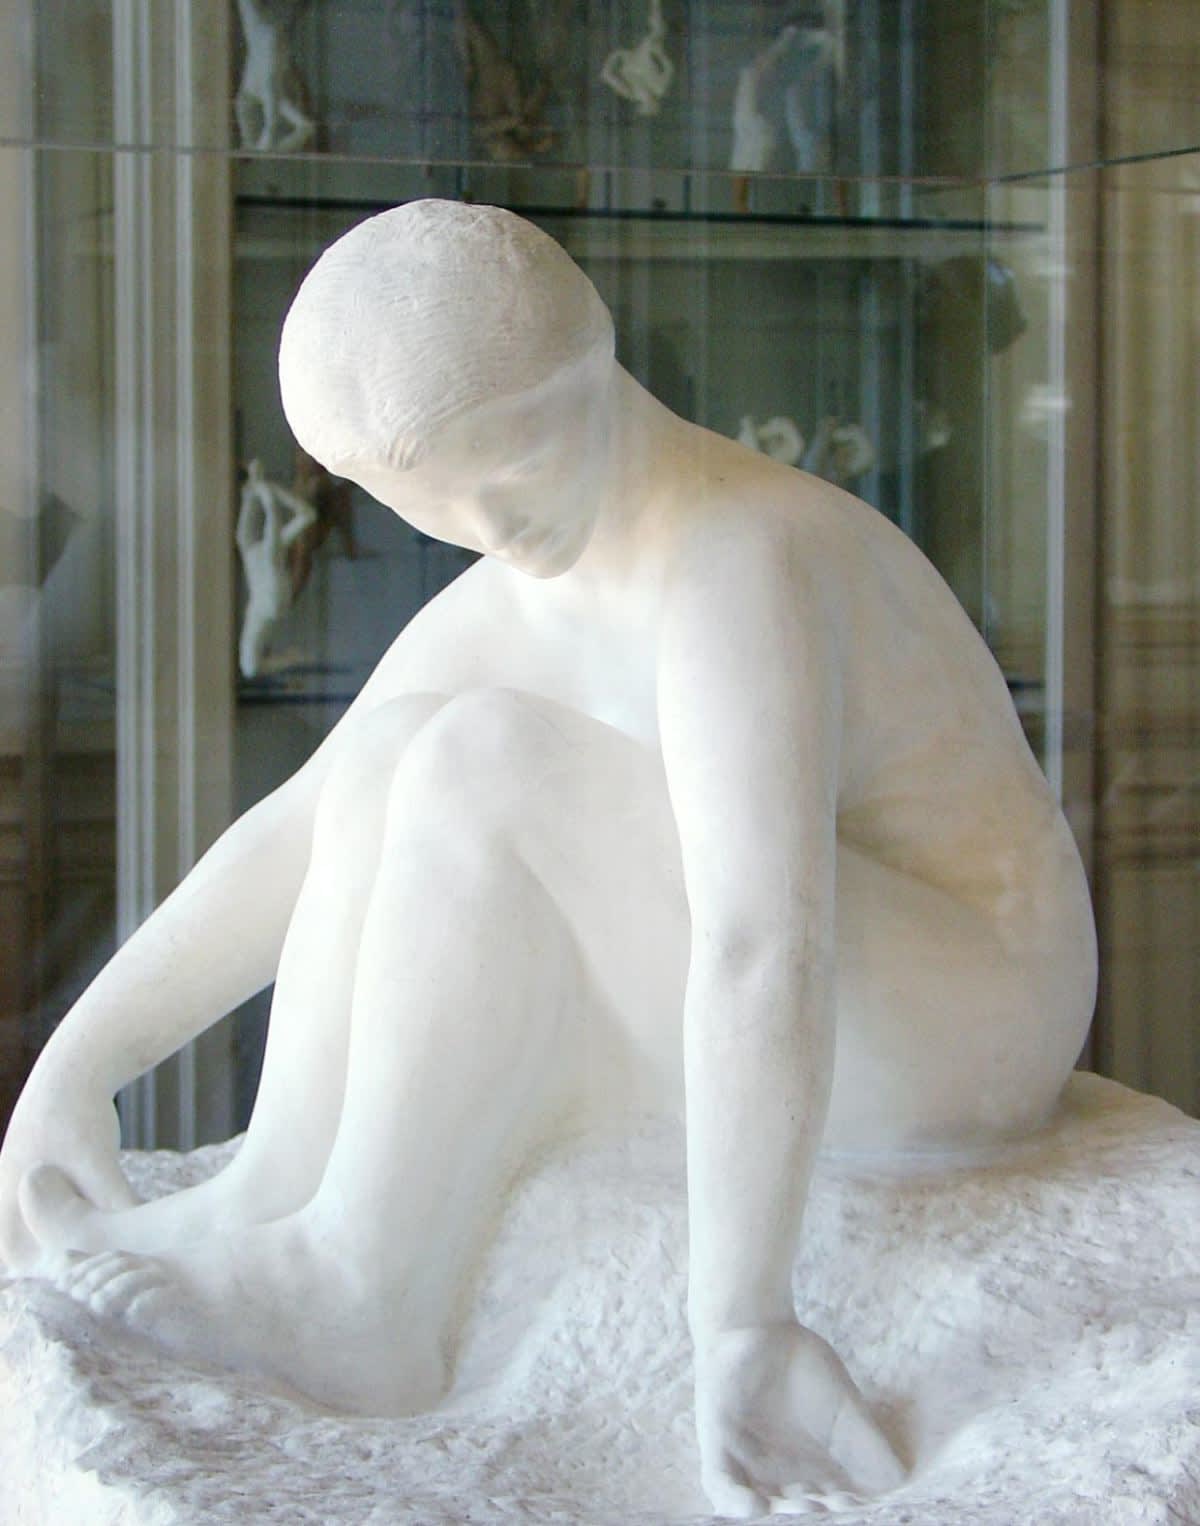 Laurie Lambrecht, Untitled (Musée Rodin Series), 2004